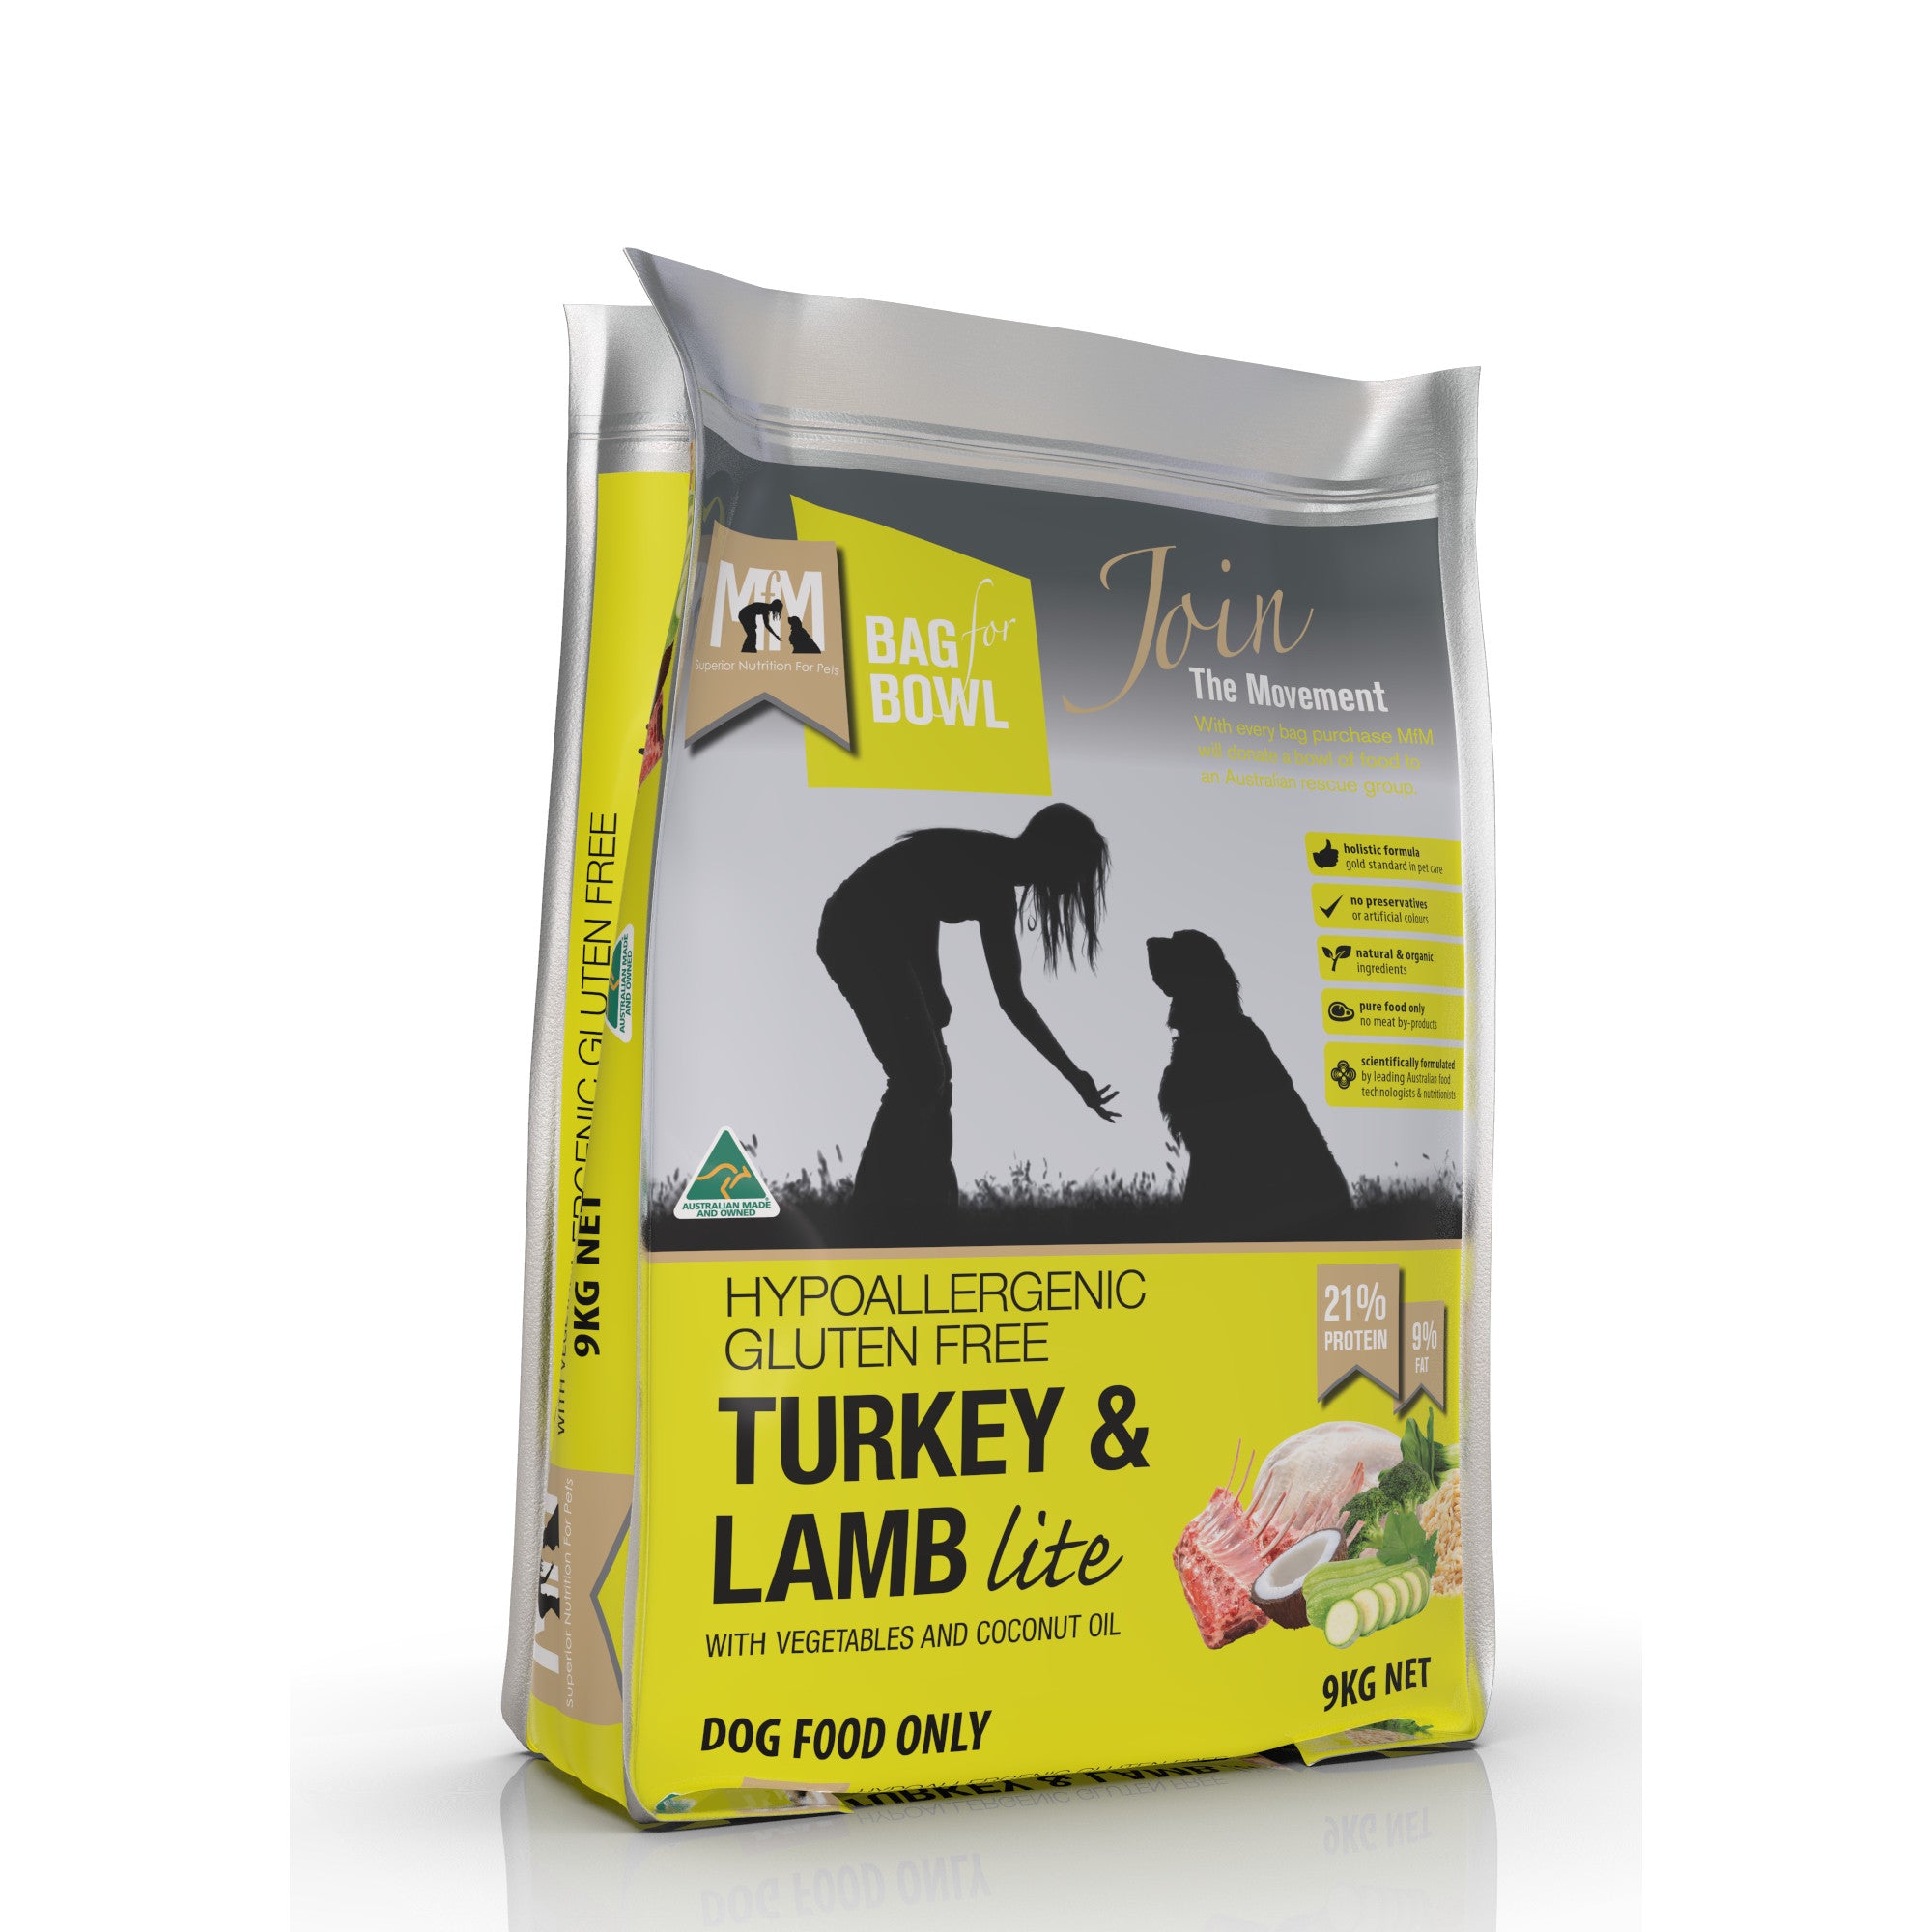 Meals for Mutts Turkey & Lamb Lite Dog Food 9kg.